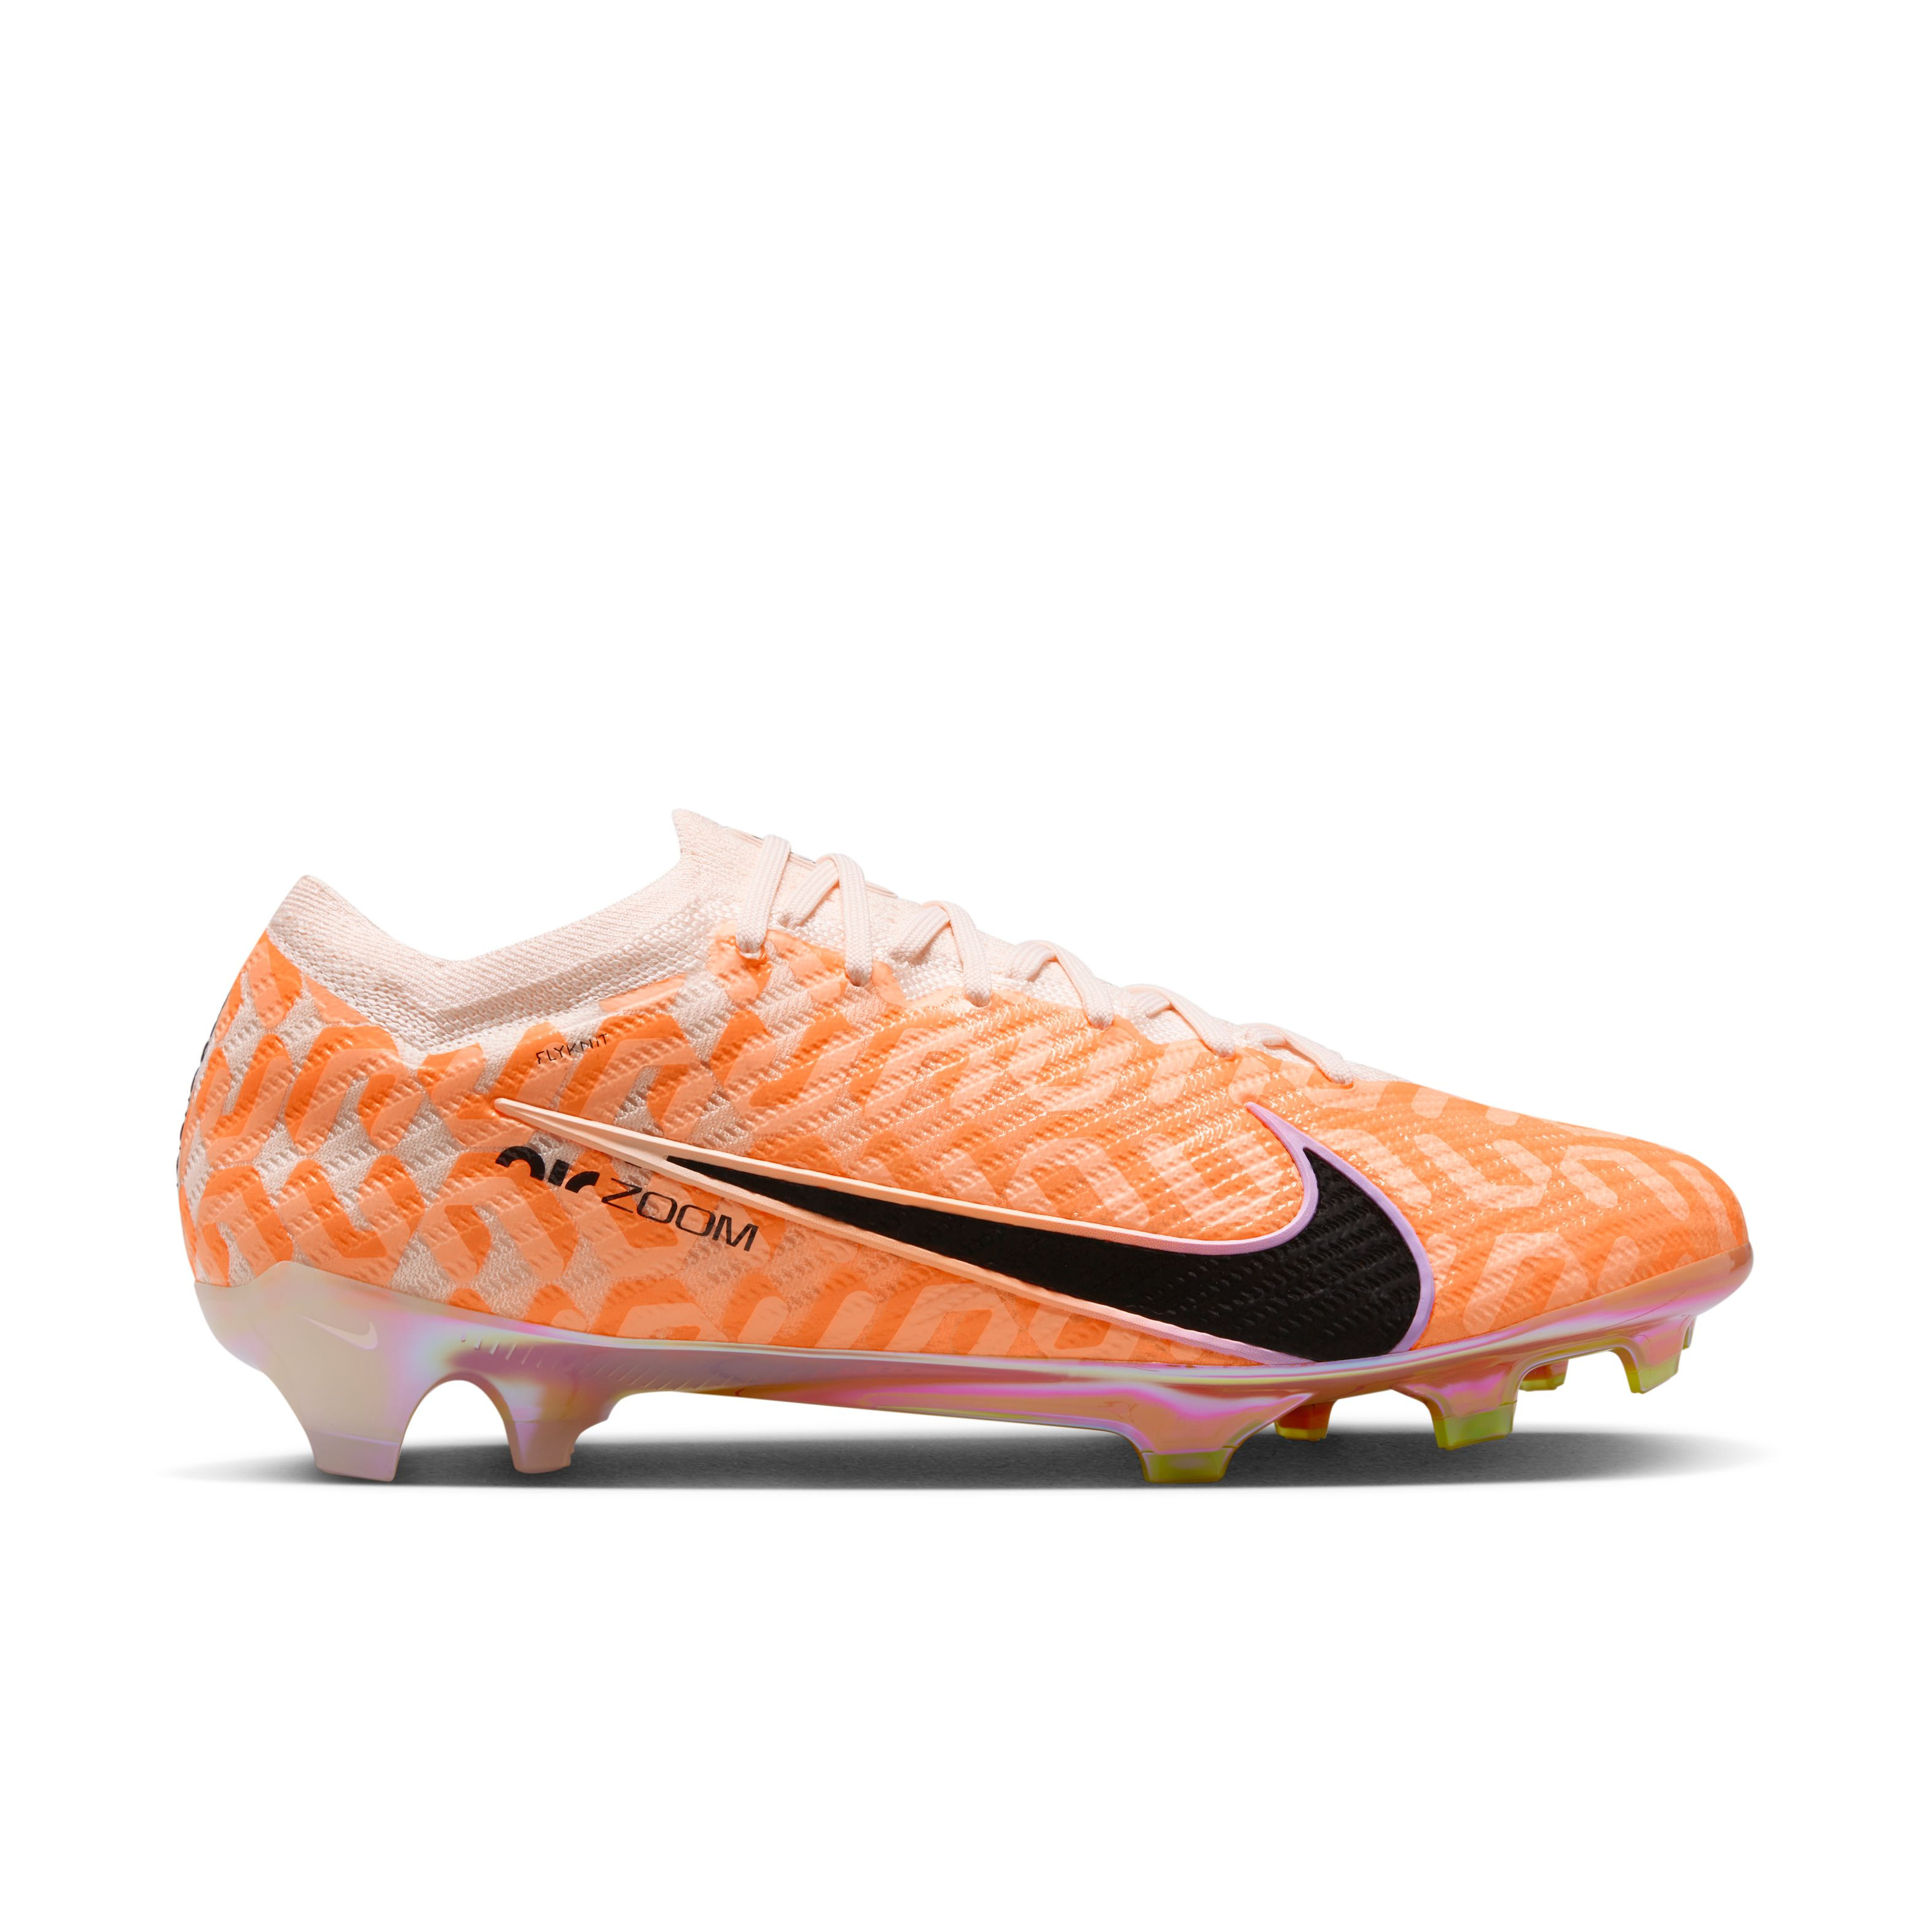 Buy Spectra Football Football Shoes online | Looksgud.in